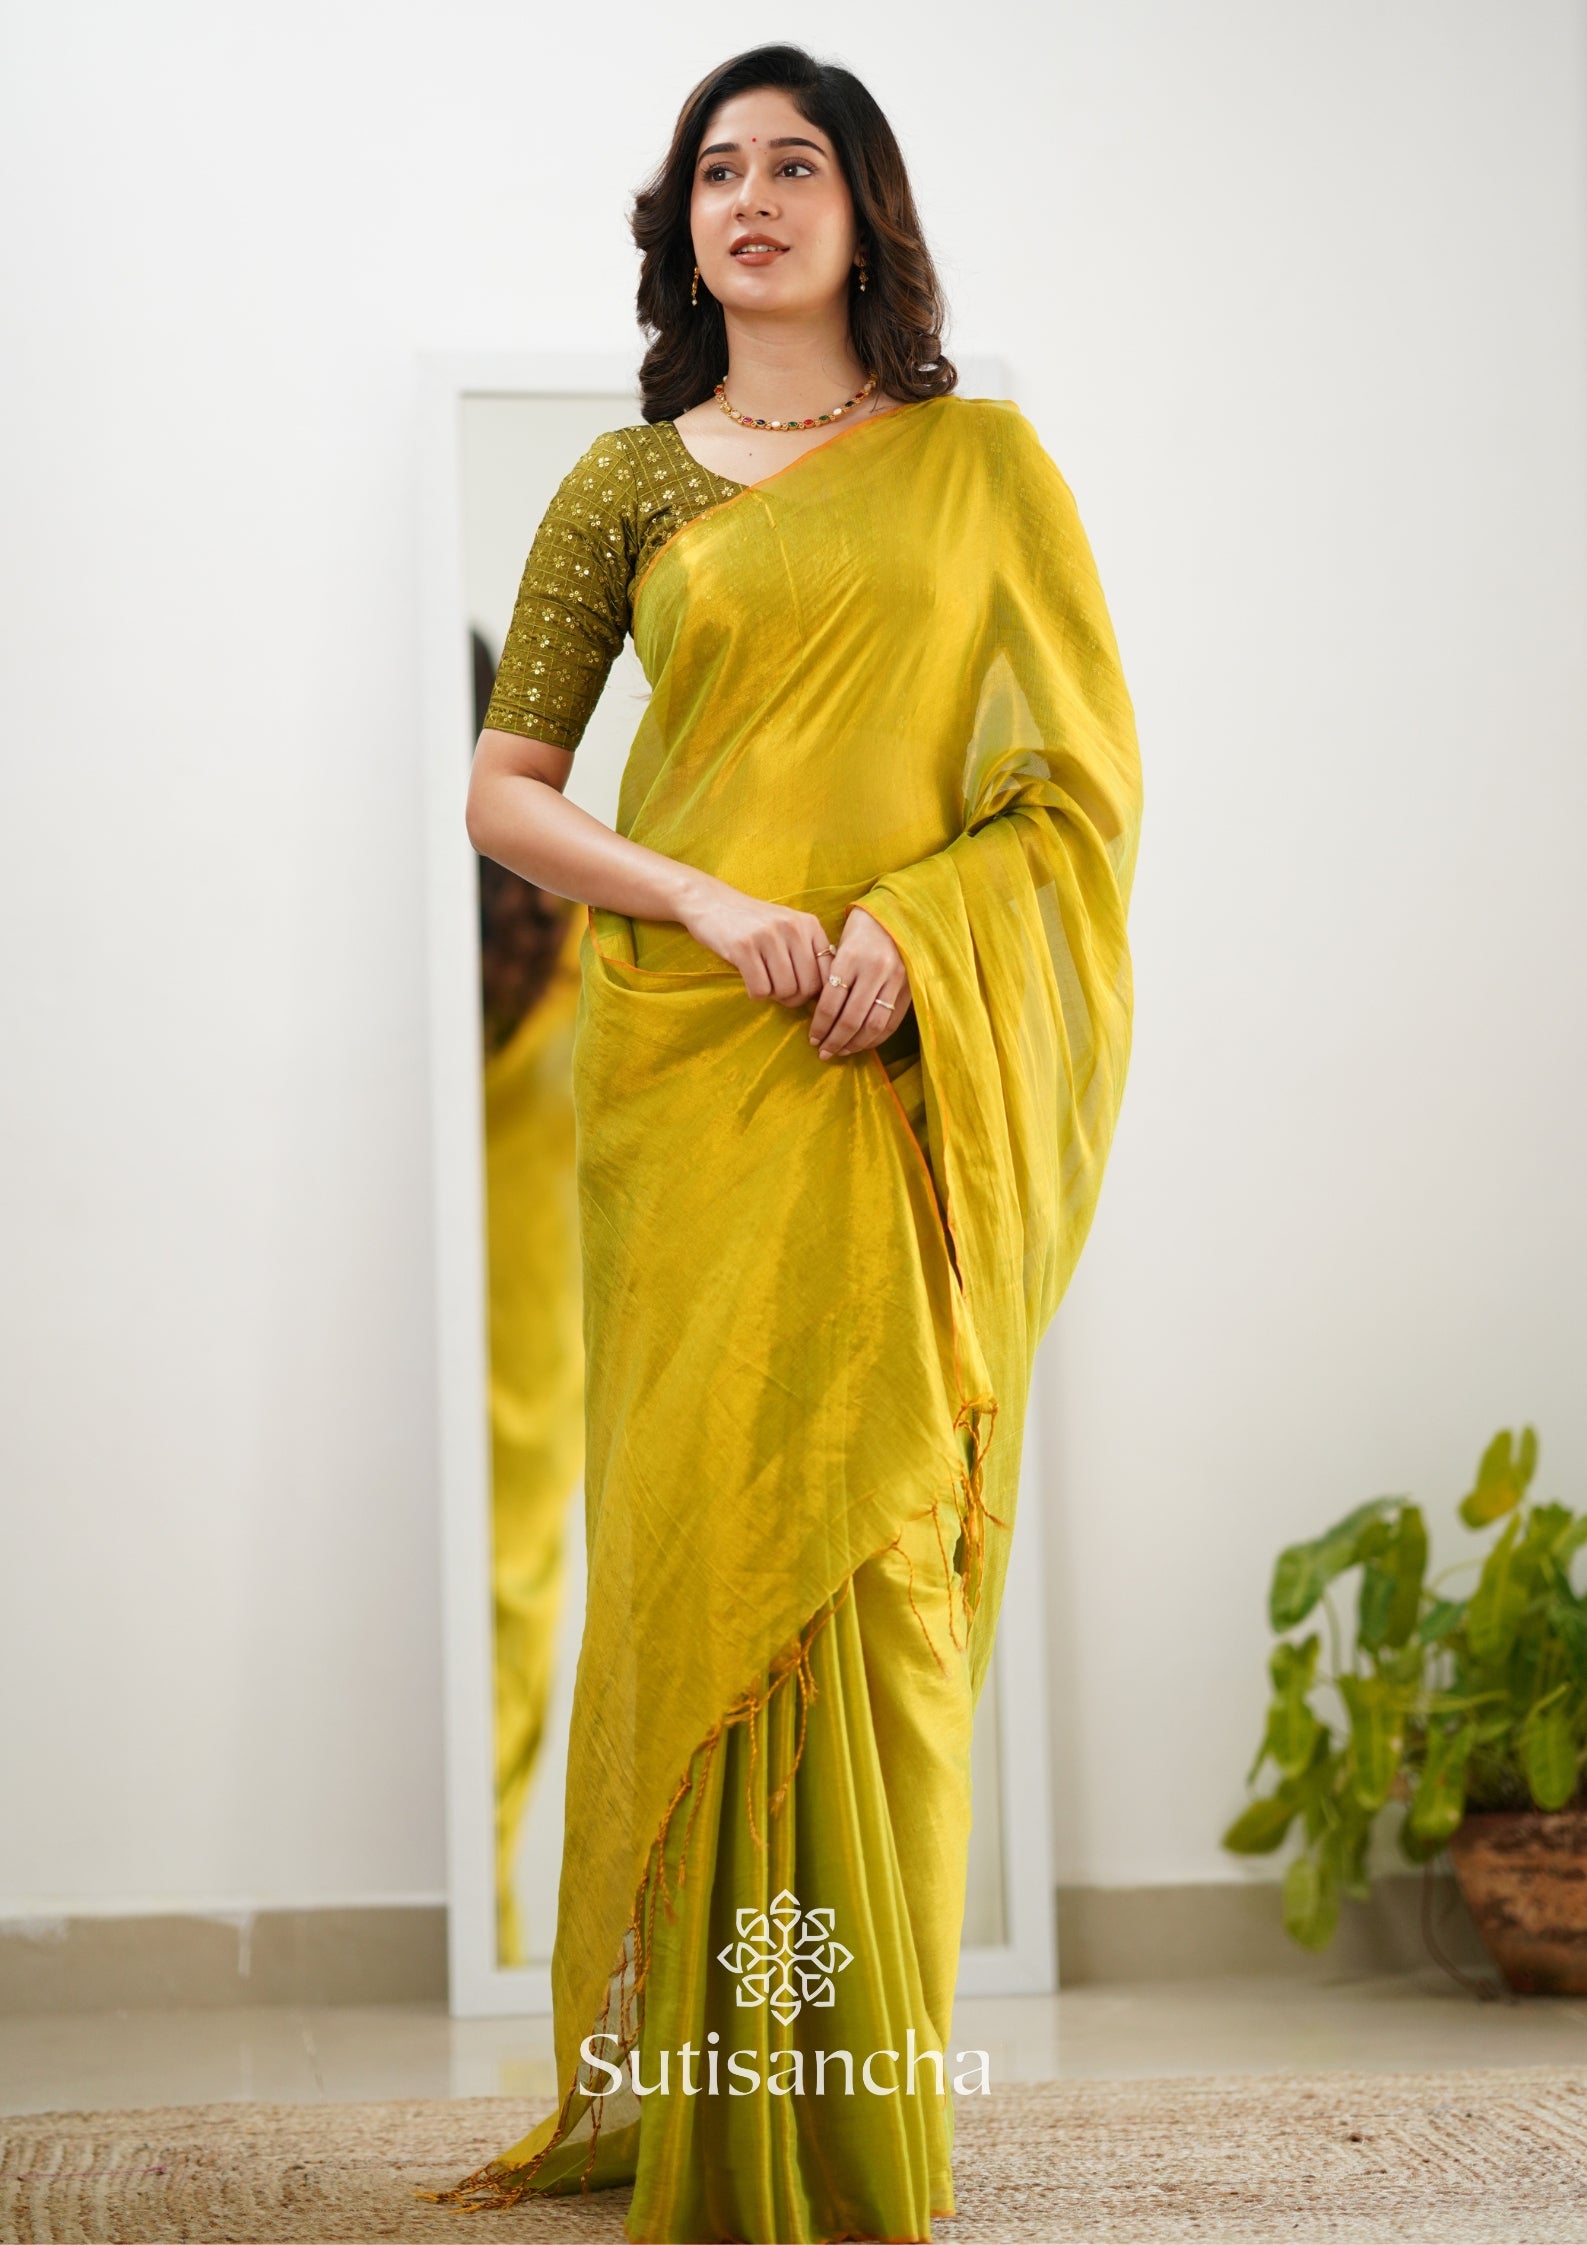 Sutisancha Lime Green Handloom Tissue Saree With Designer Blouse